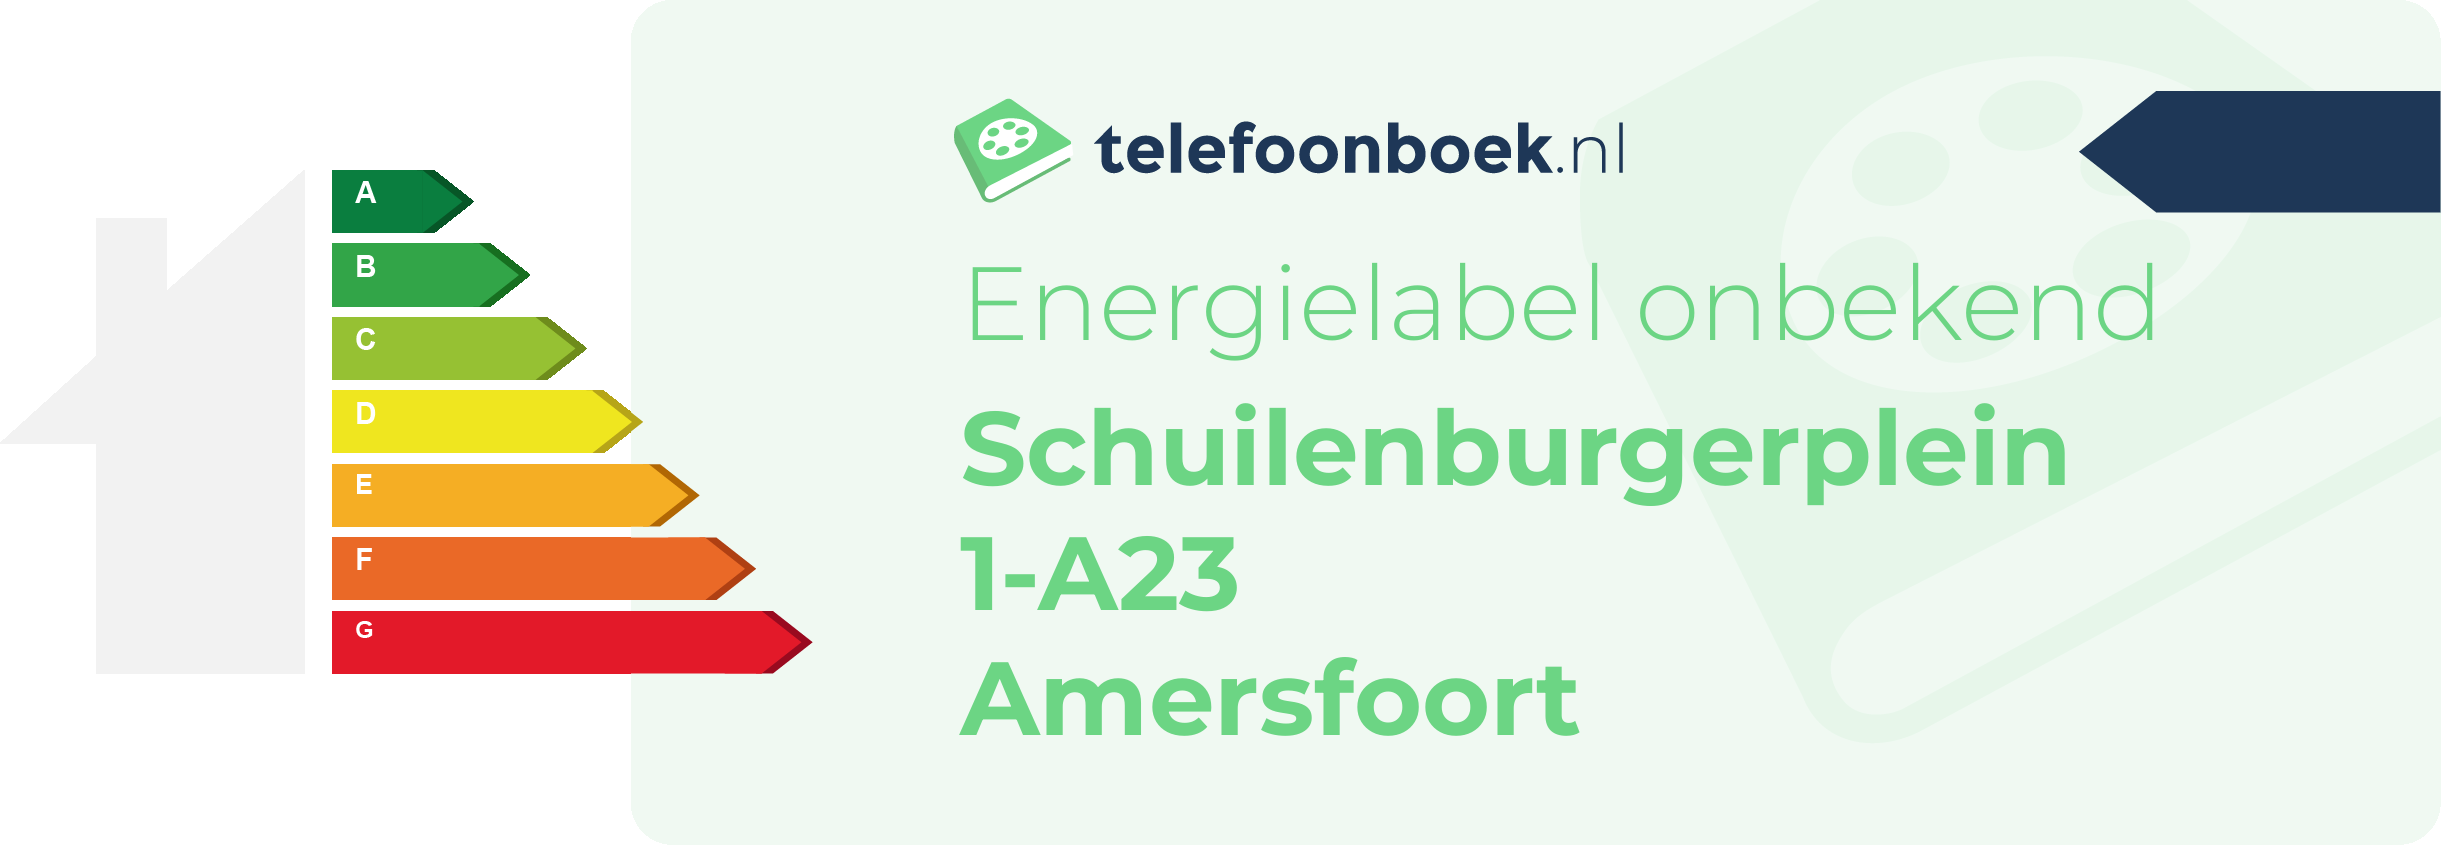 Energielabel Schuilenburgerplein 1-A23 Amersfoort